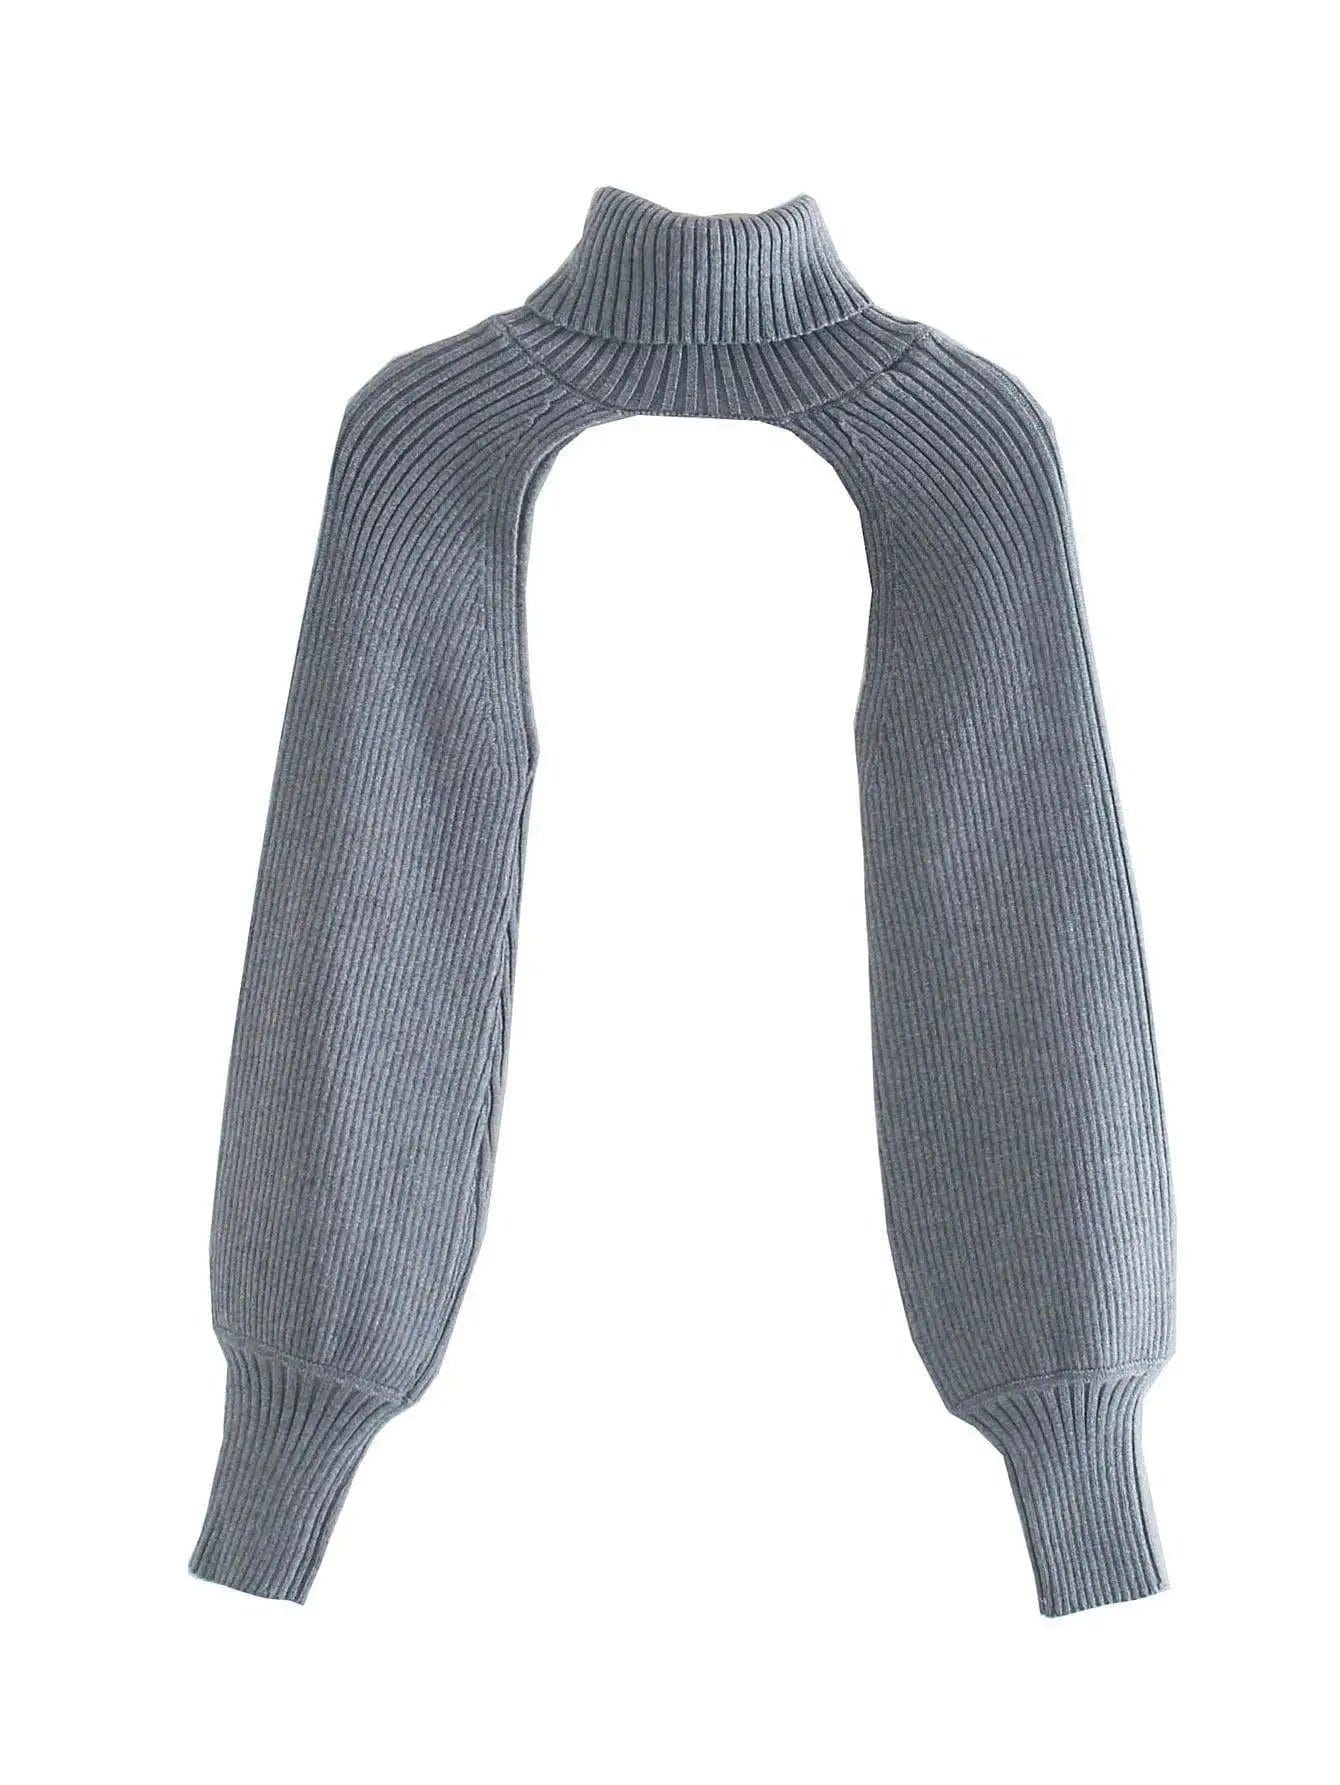 LOVEMI Ctop Grey / One size Lovemi -  Retro Scheming Niche Design Knit Sweater Sleeves